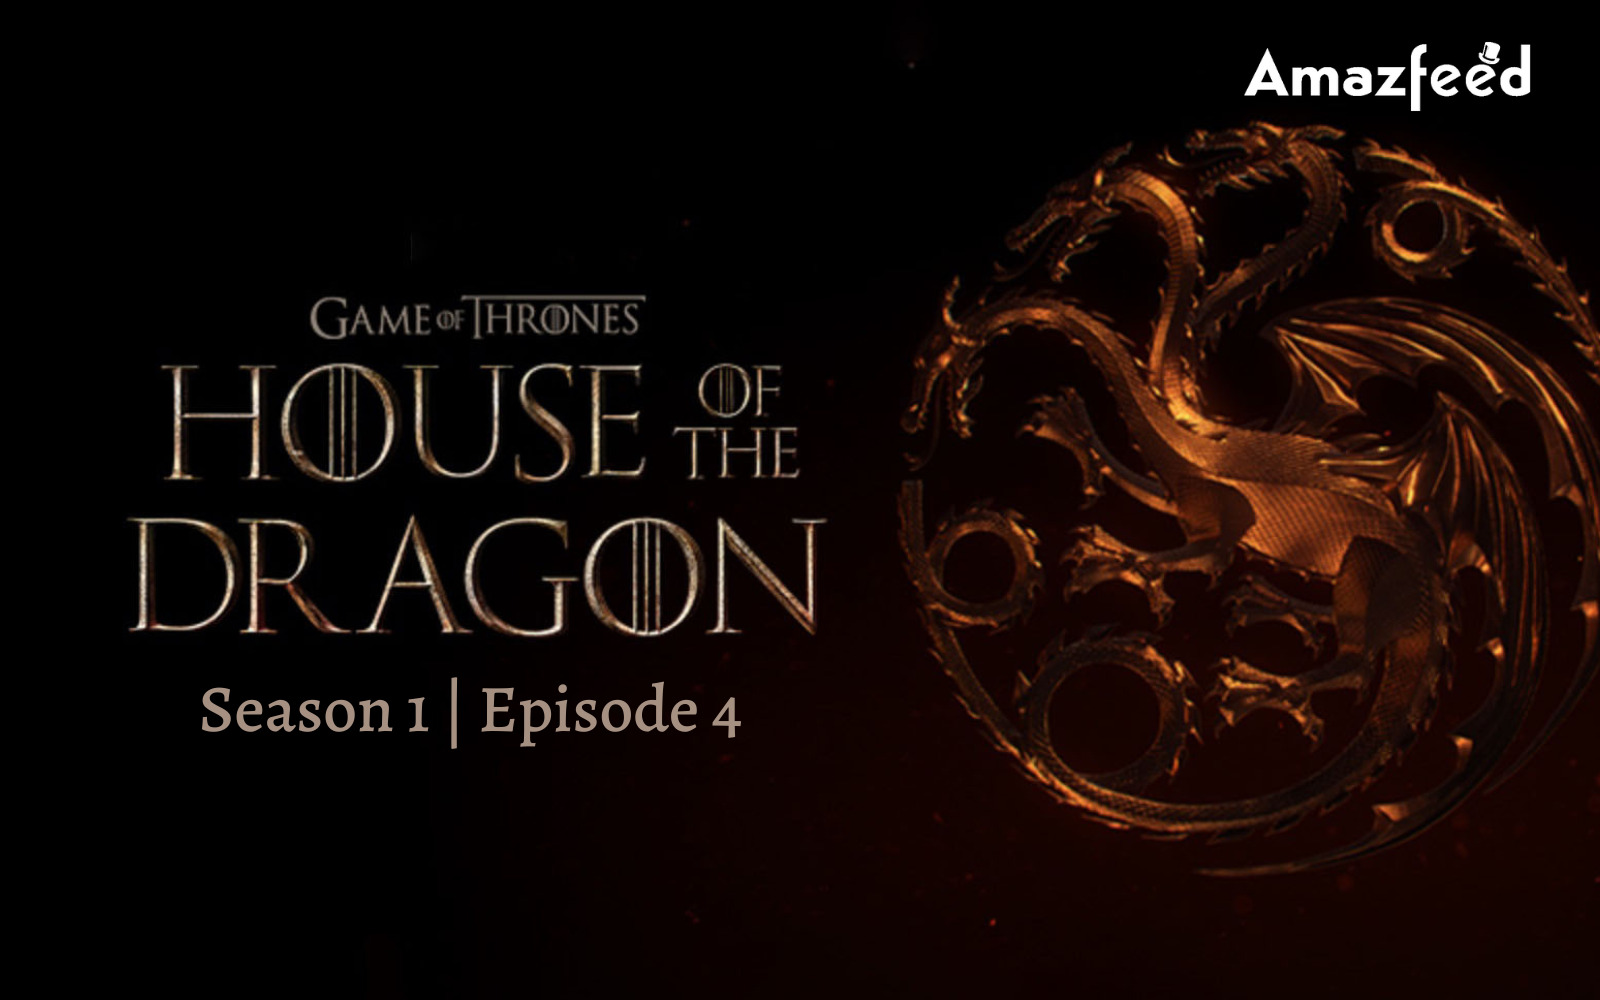 House Of The Dragon Season 1 Episode 4.1